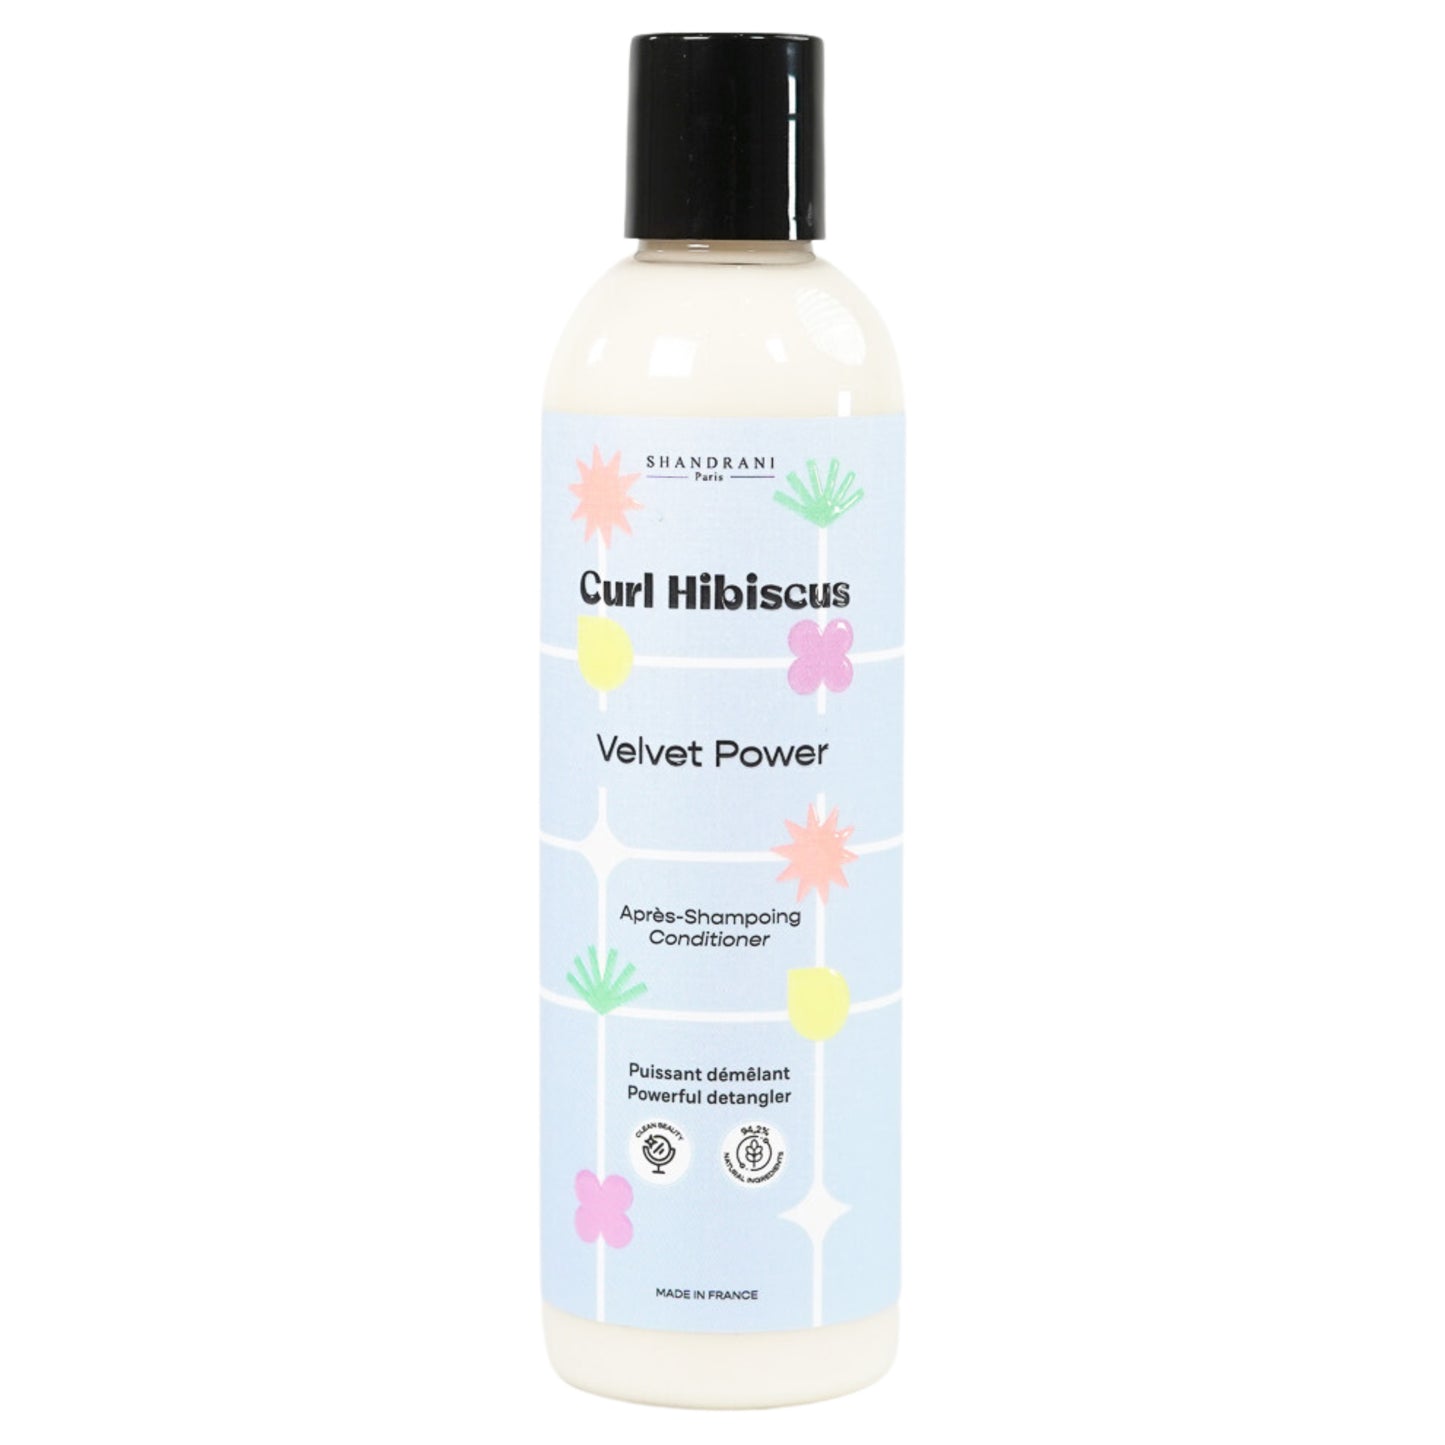 Curl Hibiscus - Velvet Power (après-shampoing)